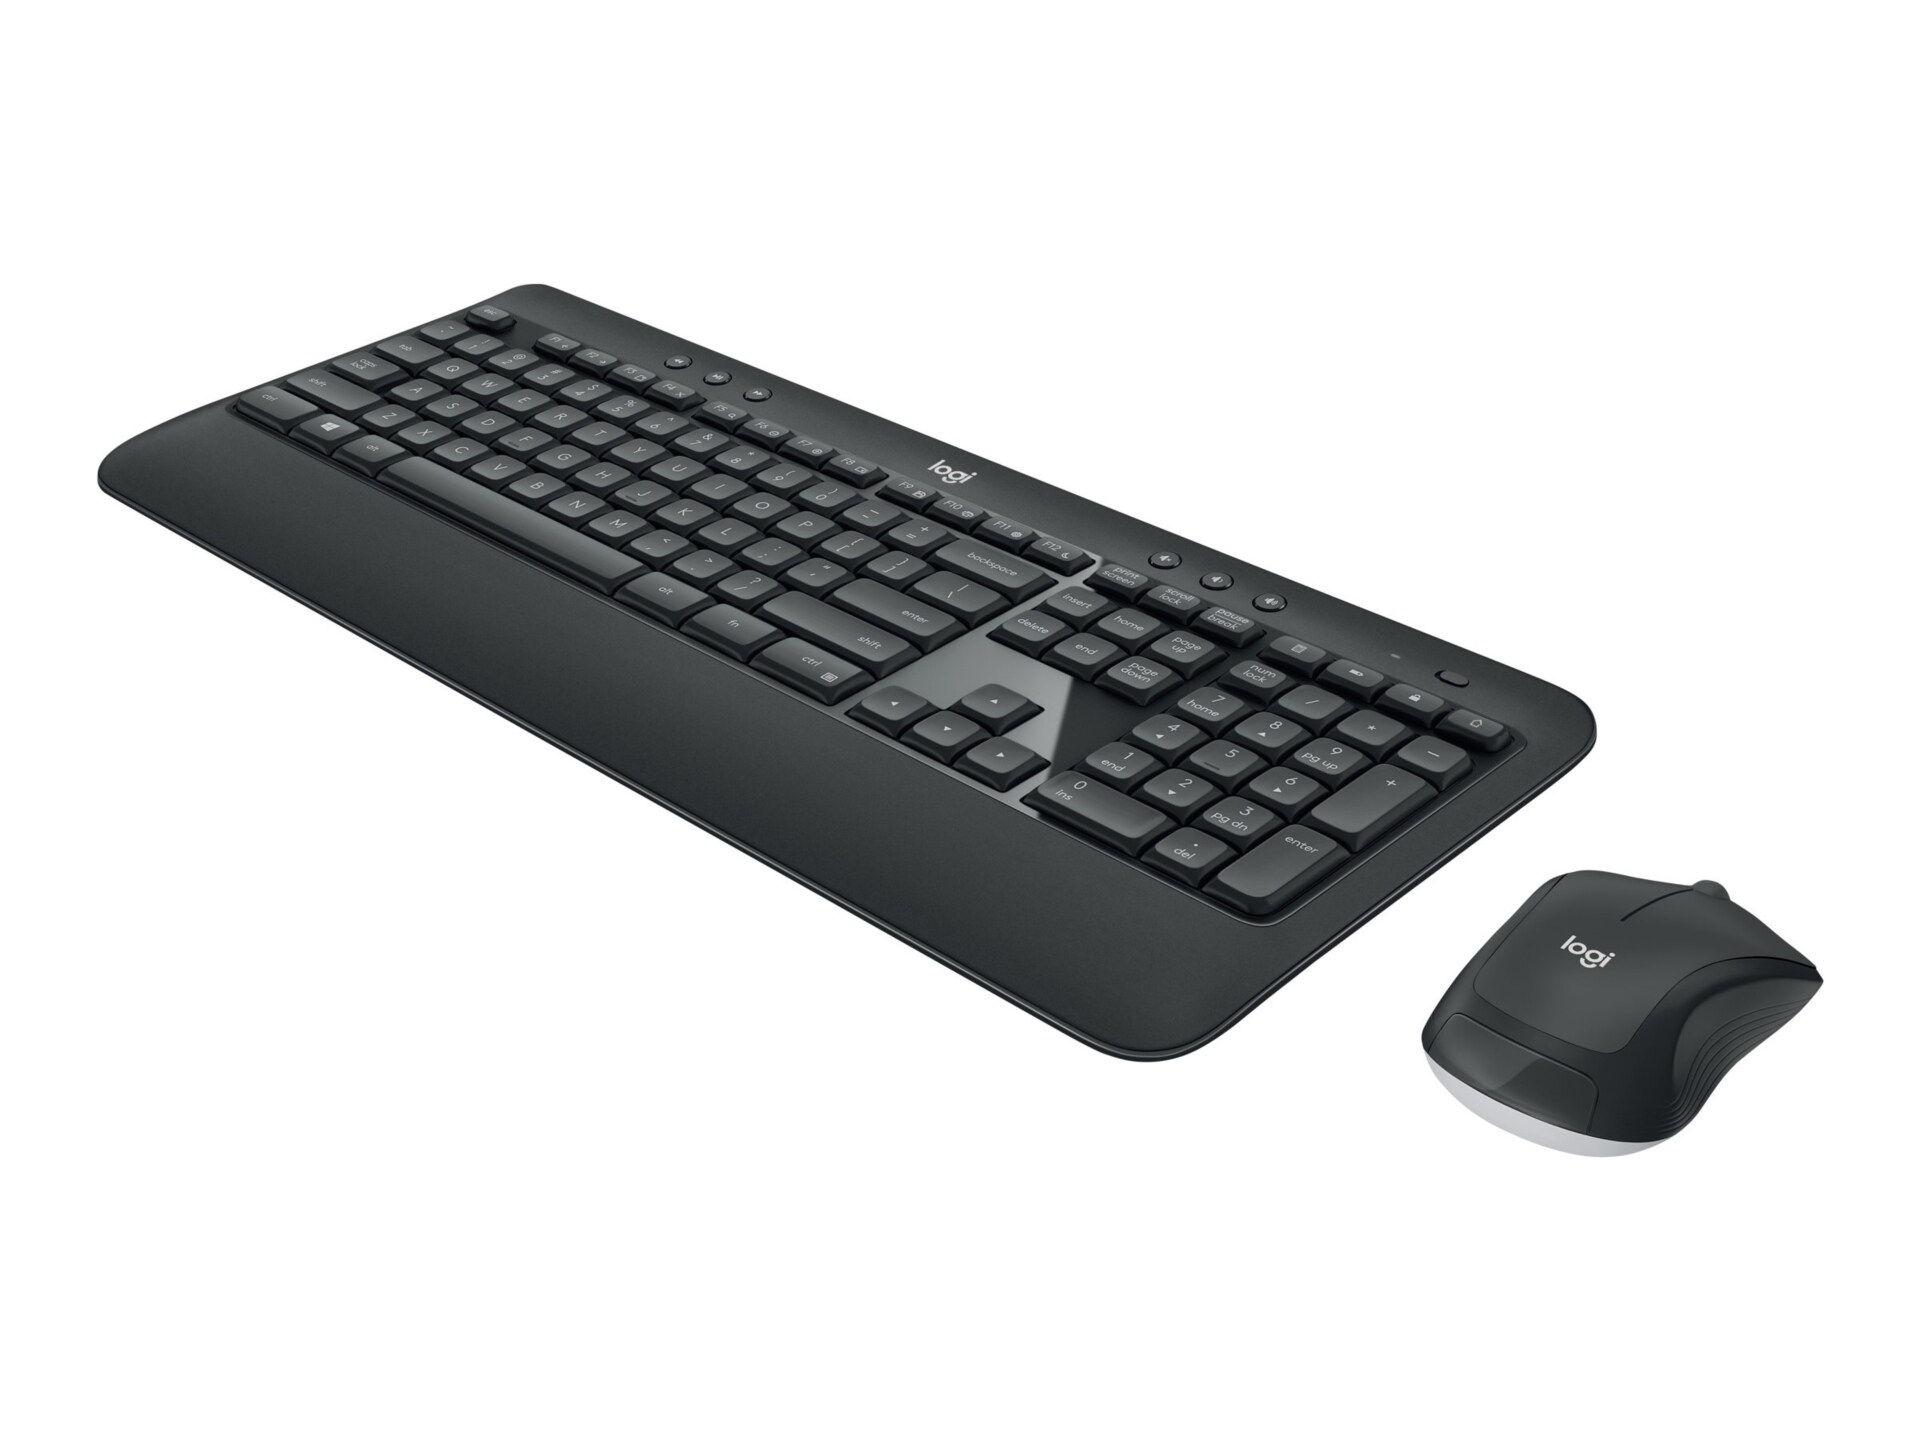 Logitech MK540 Advanced Keyboard and Mouse Set